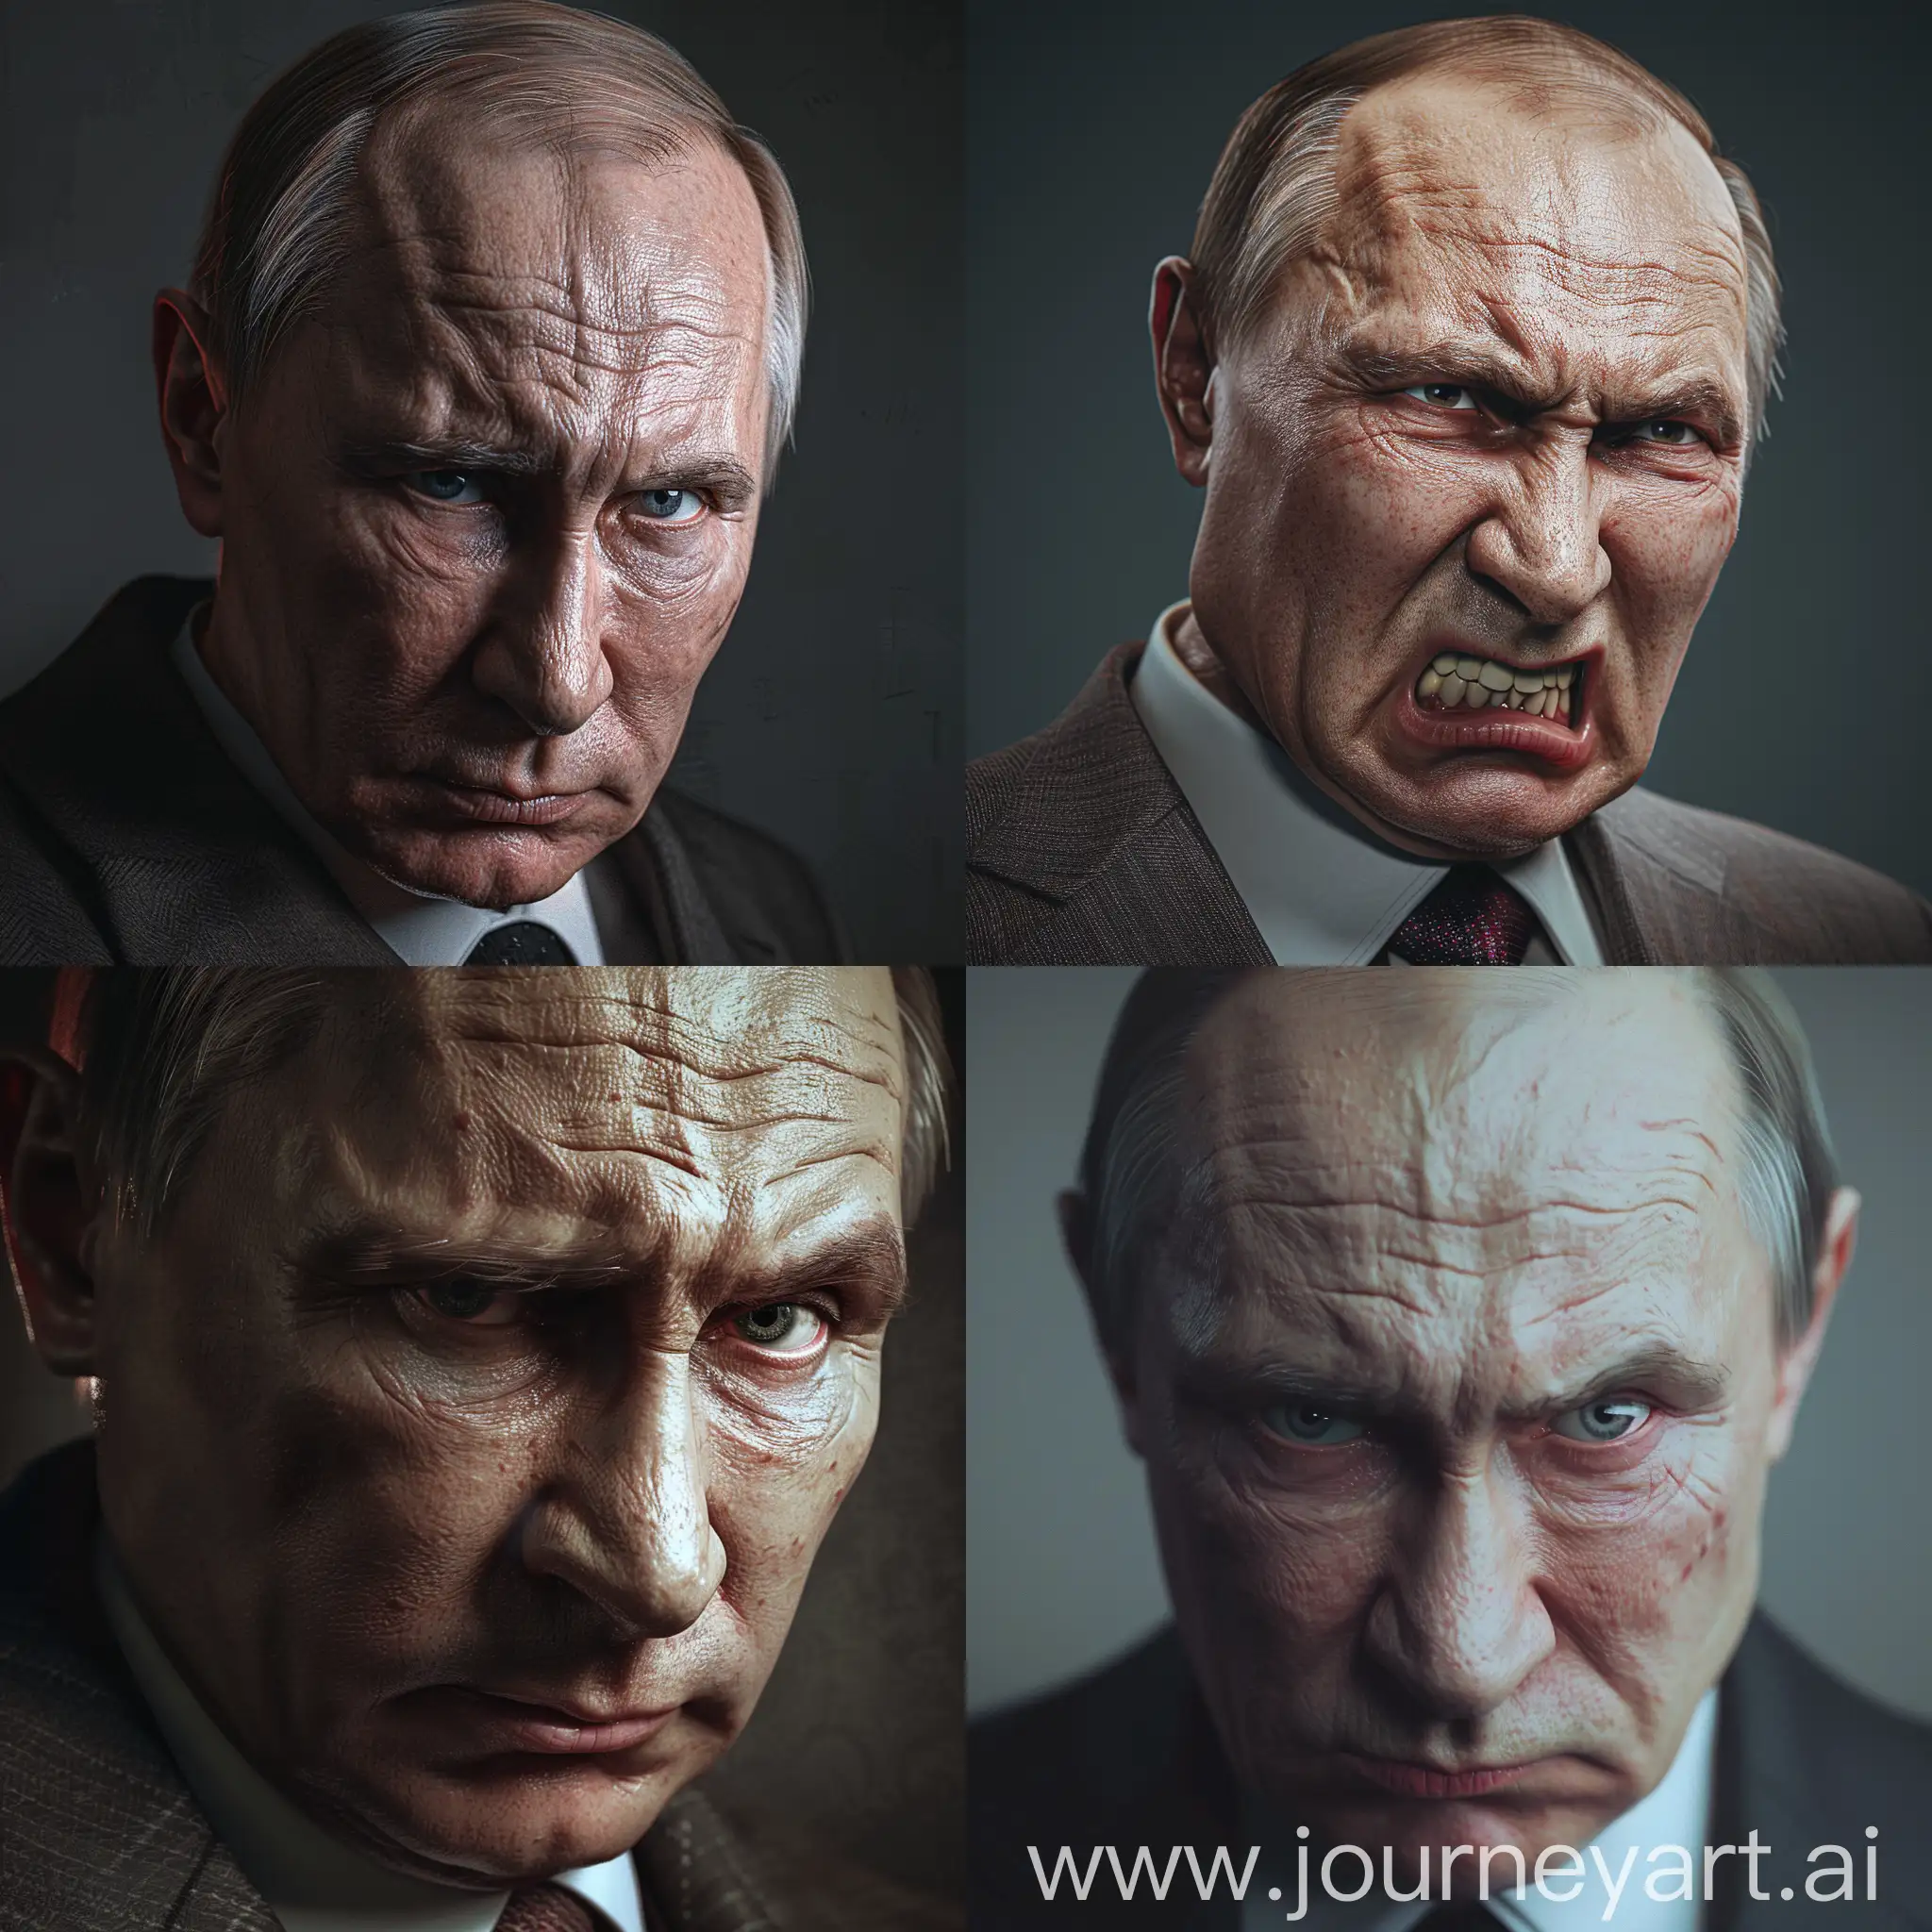 Intense-Moment-President-Putins-Commanding-Presence